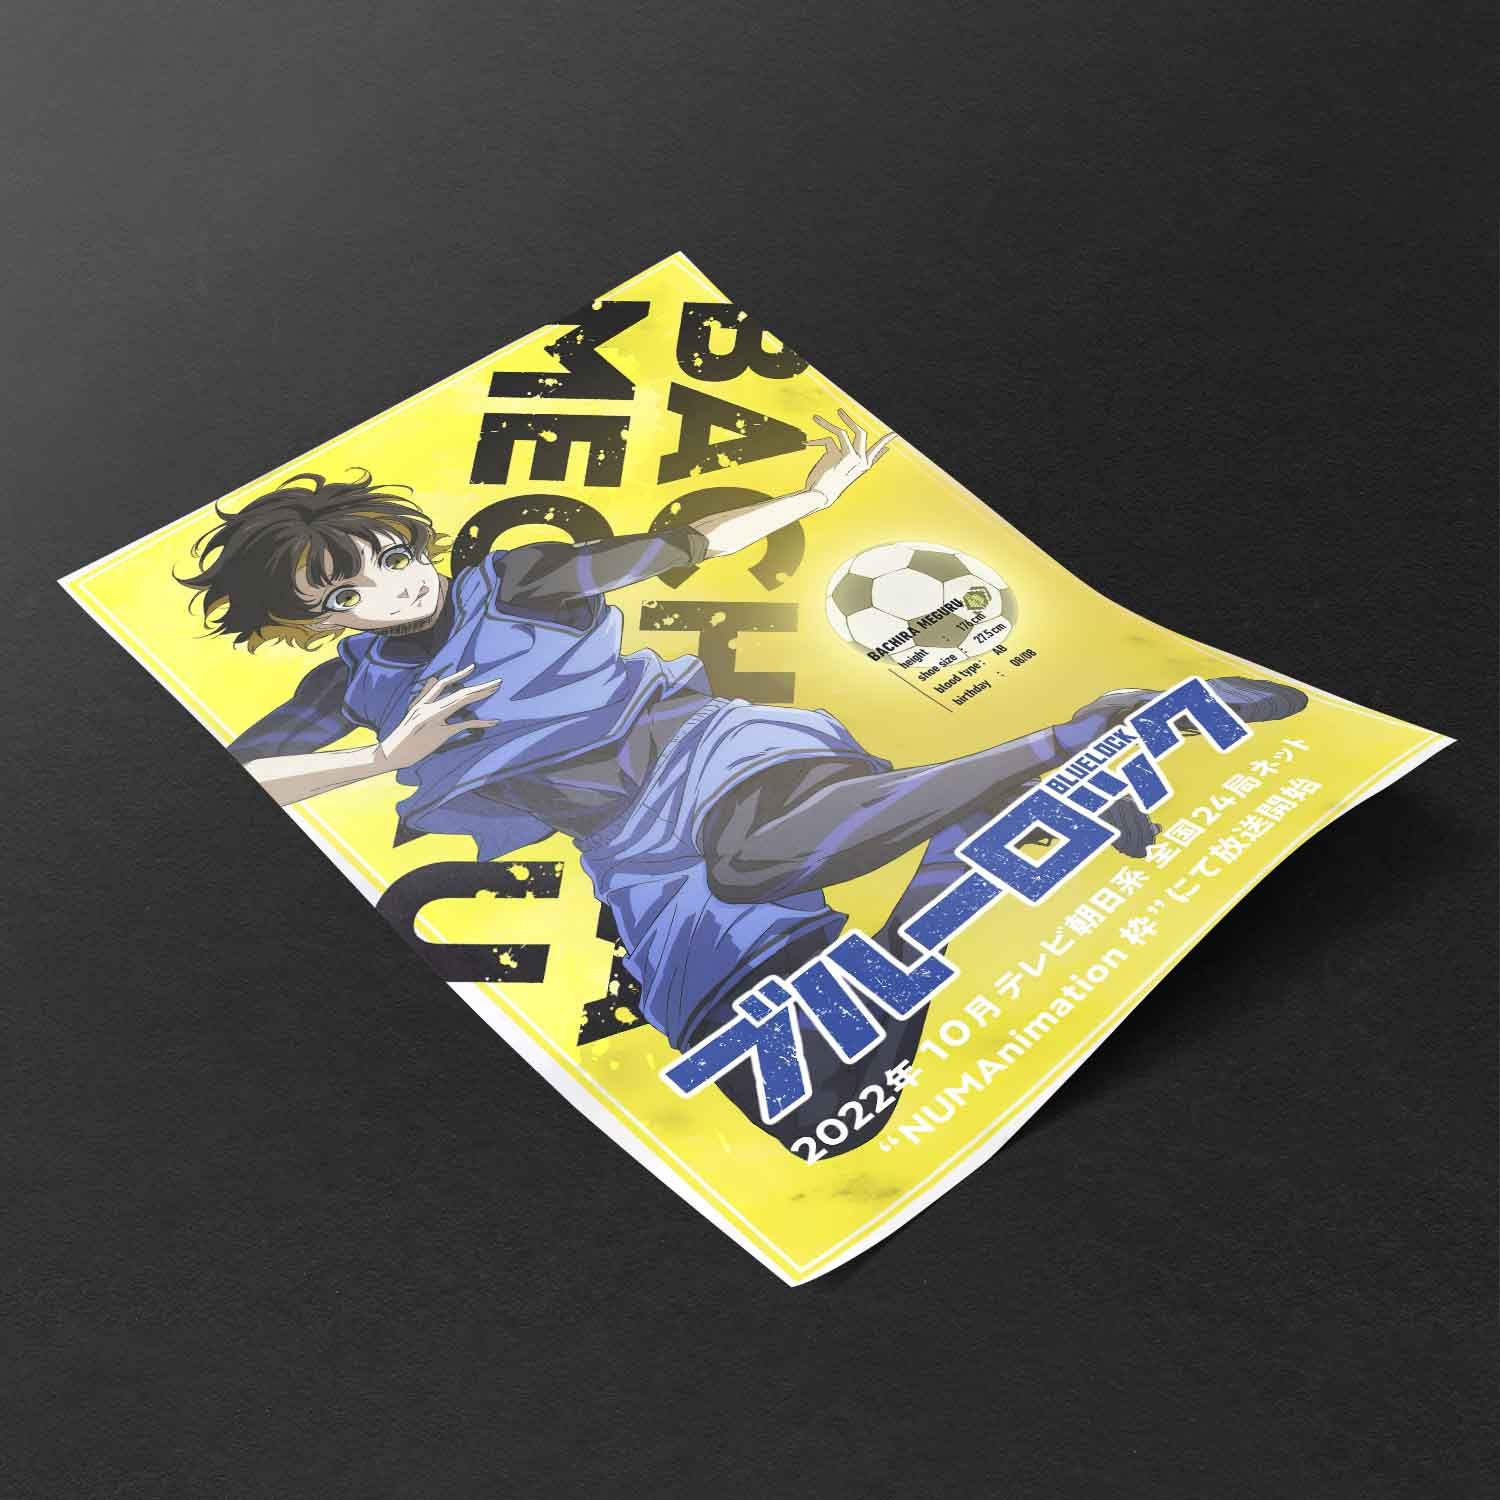 JIAHF Anime Poster Blue Lock Bachira Meguru Fanart Poster